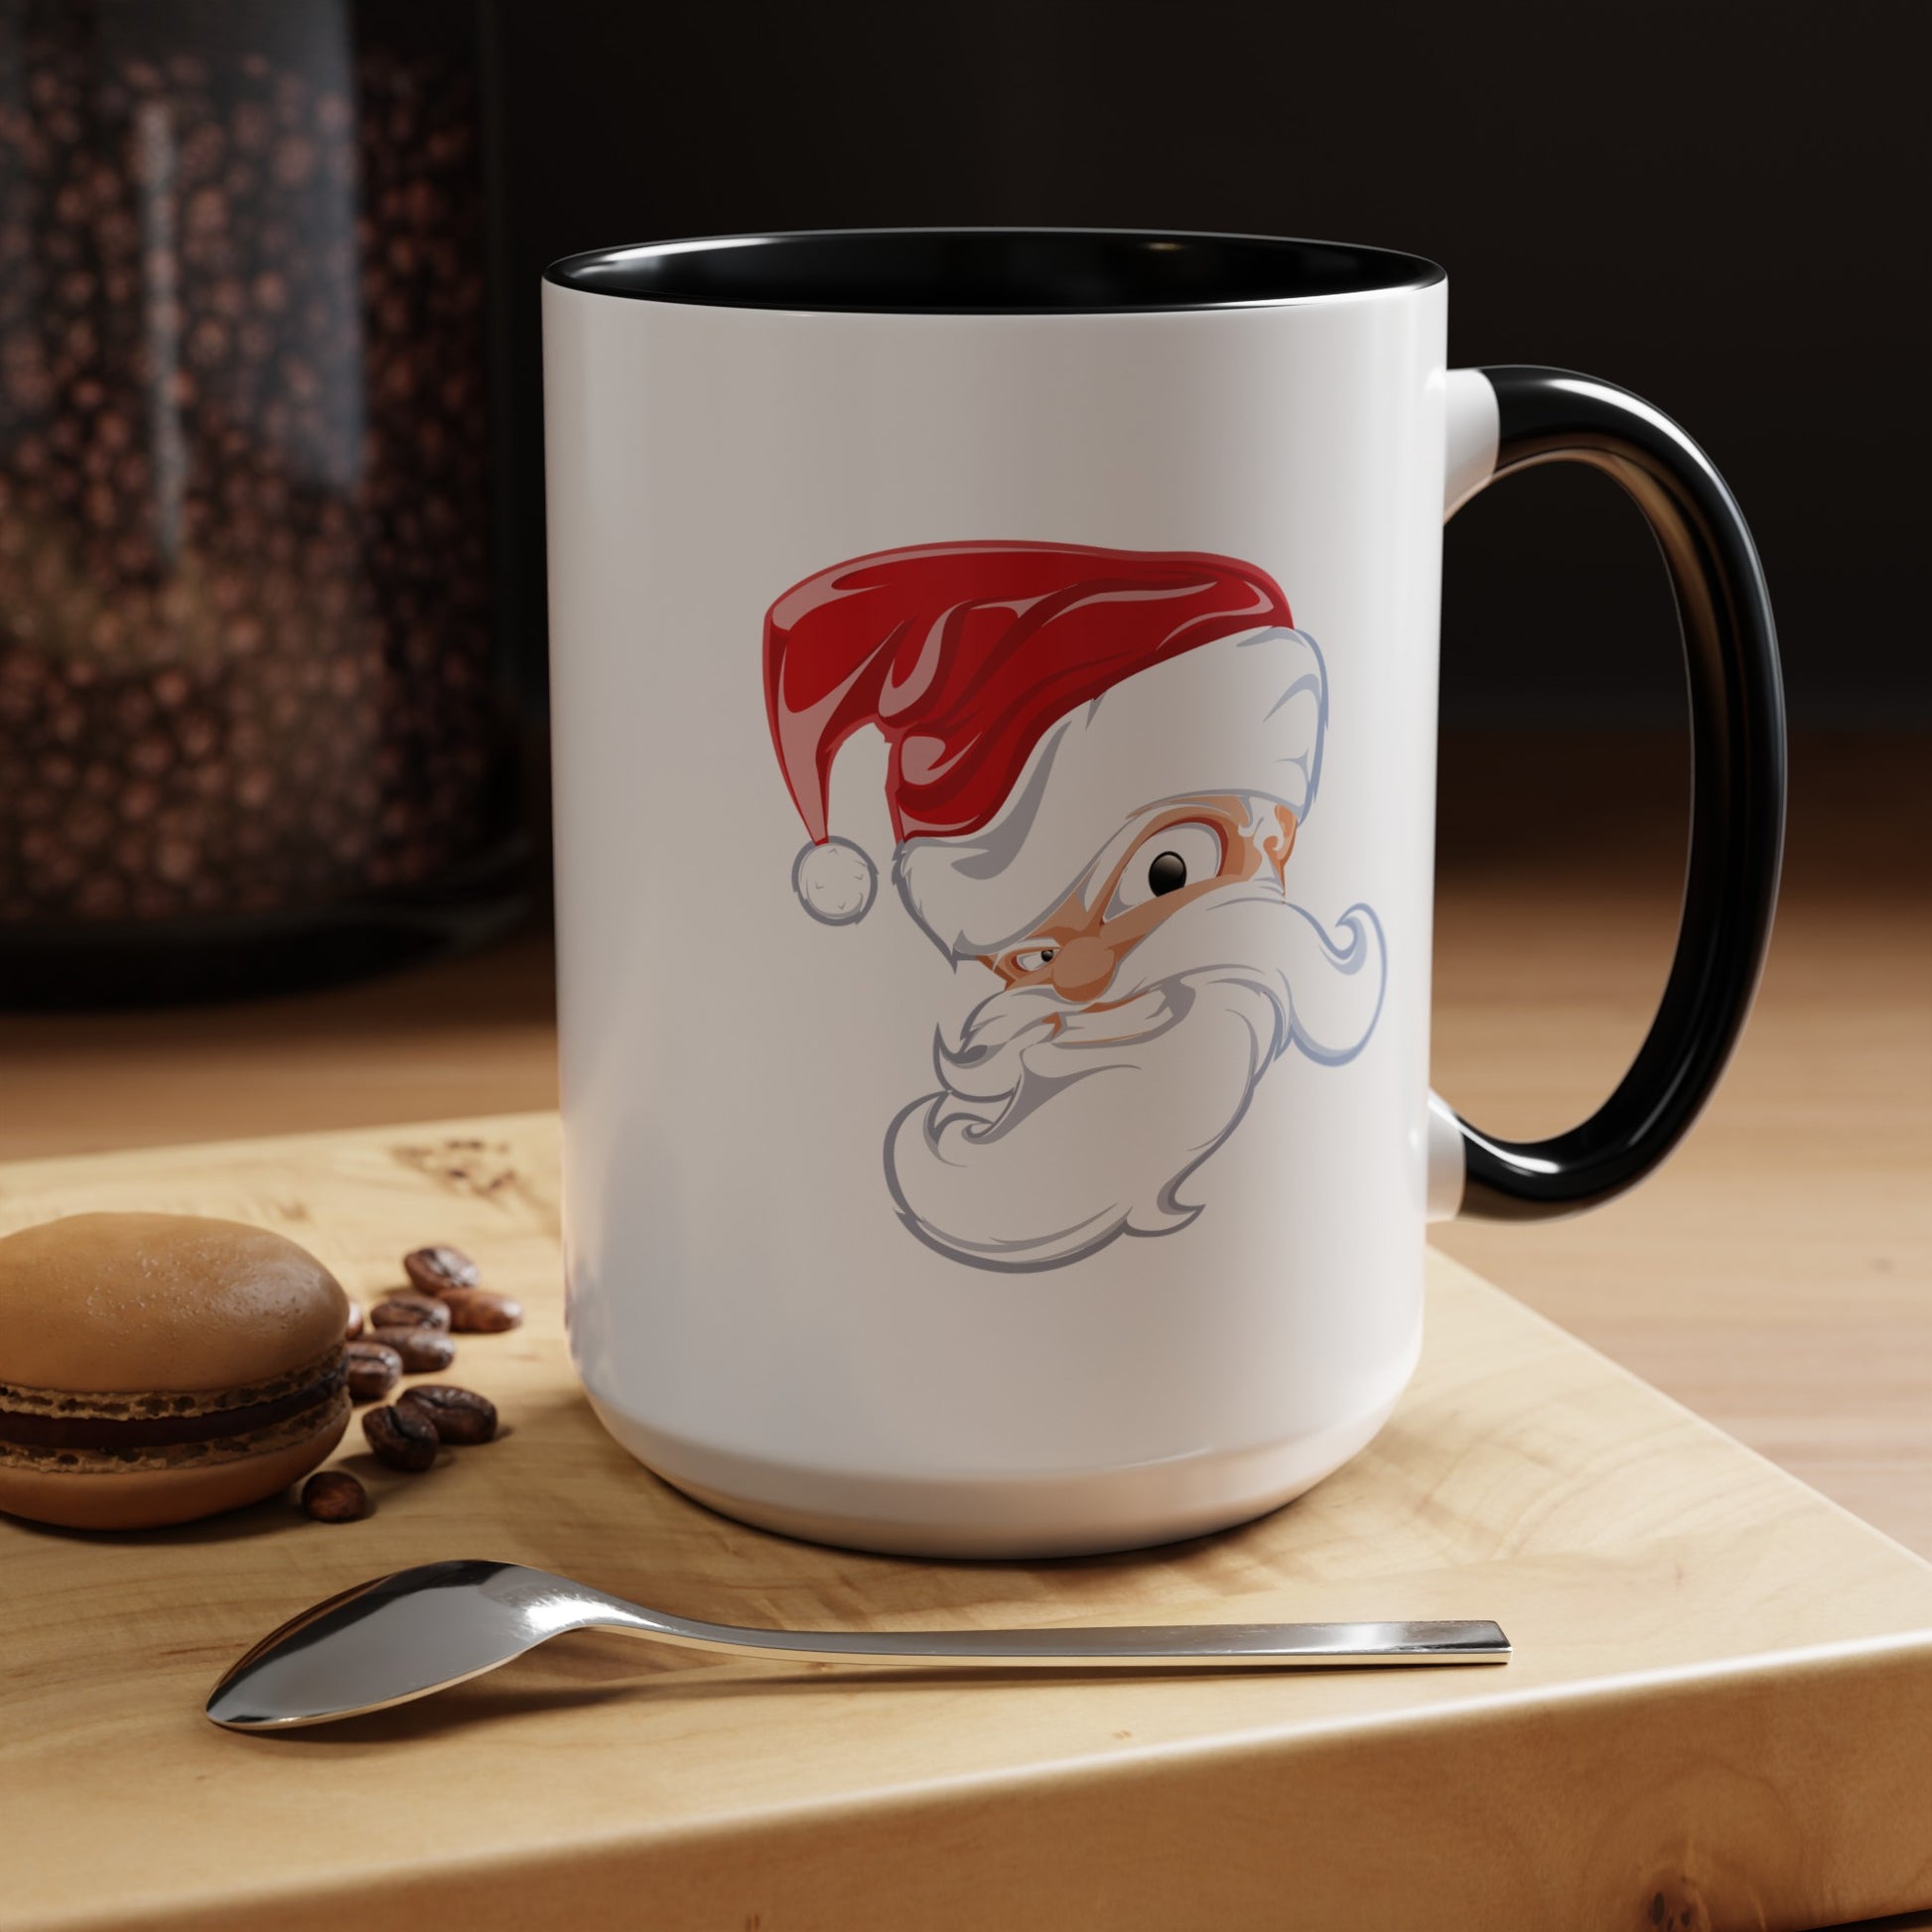 Angry Santa Christmas Coffee / Cocoa Mug - Double Sided Black Accent Ceramic 15oz - by TheGlassyLass.com